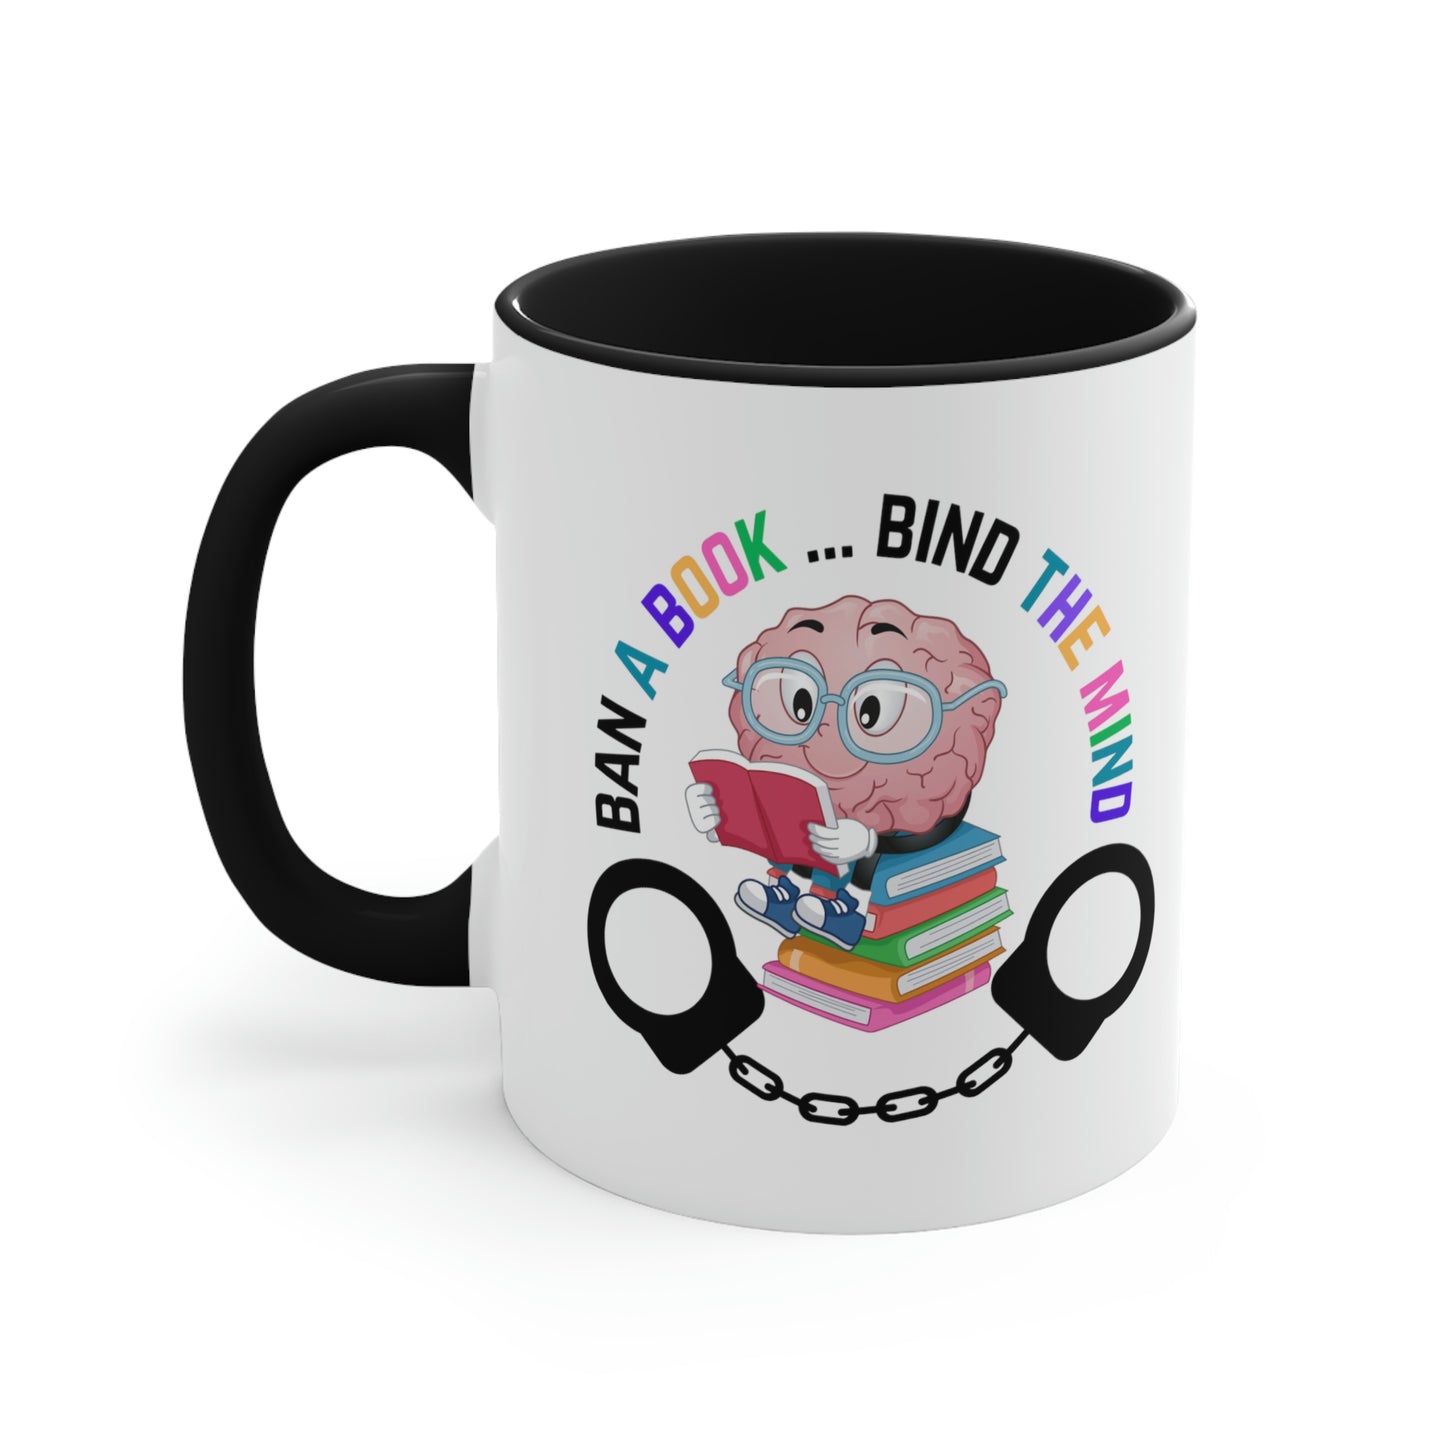 Ban or Bind Coffee Mug, 11oz